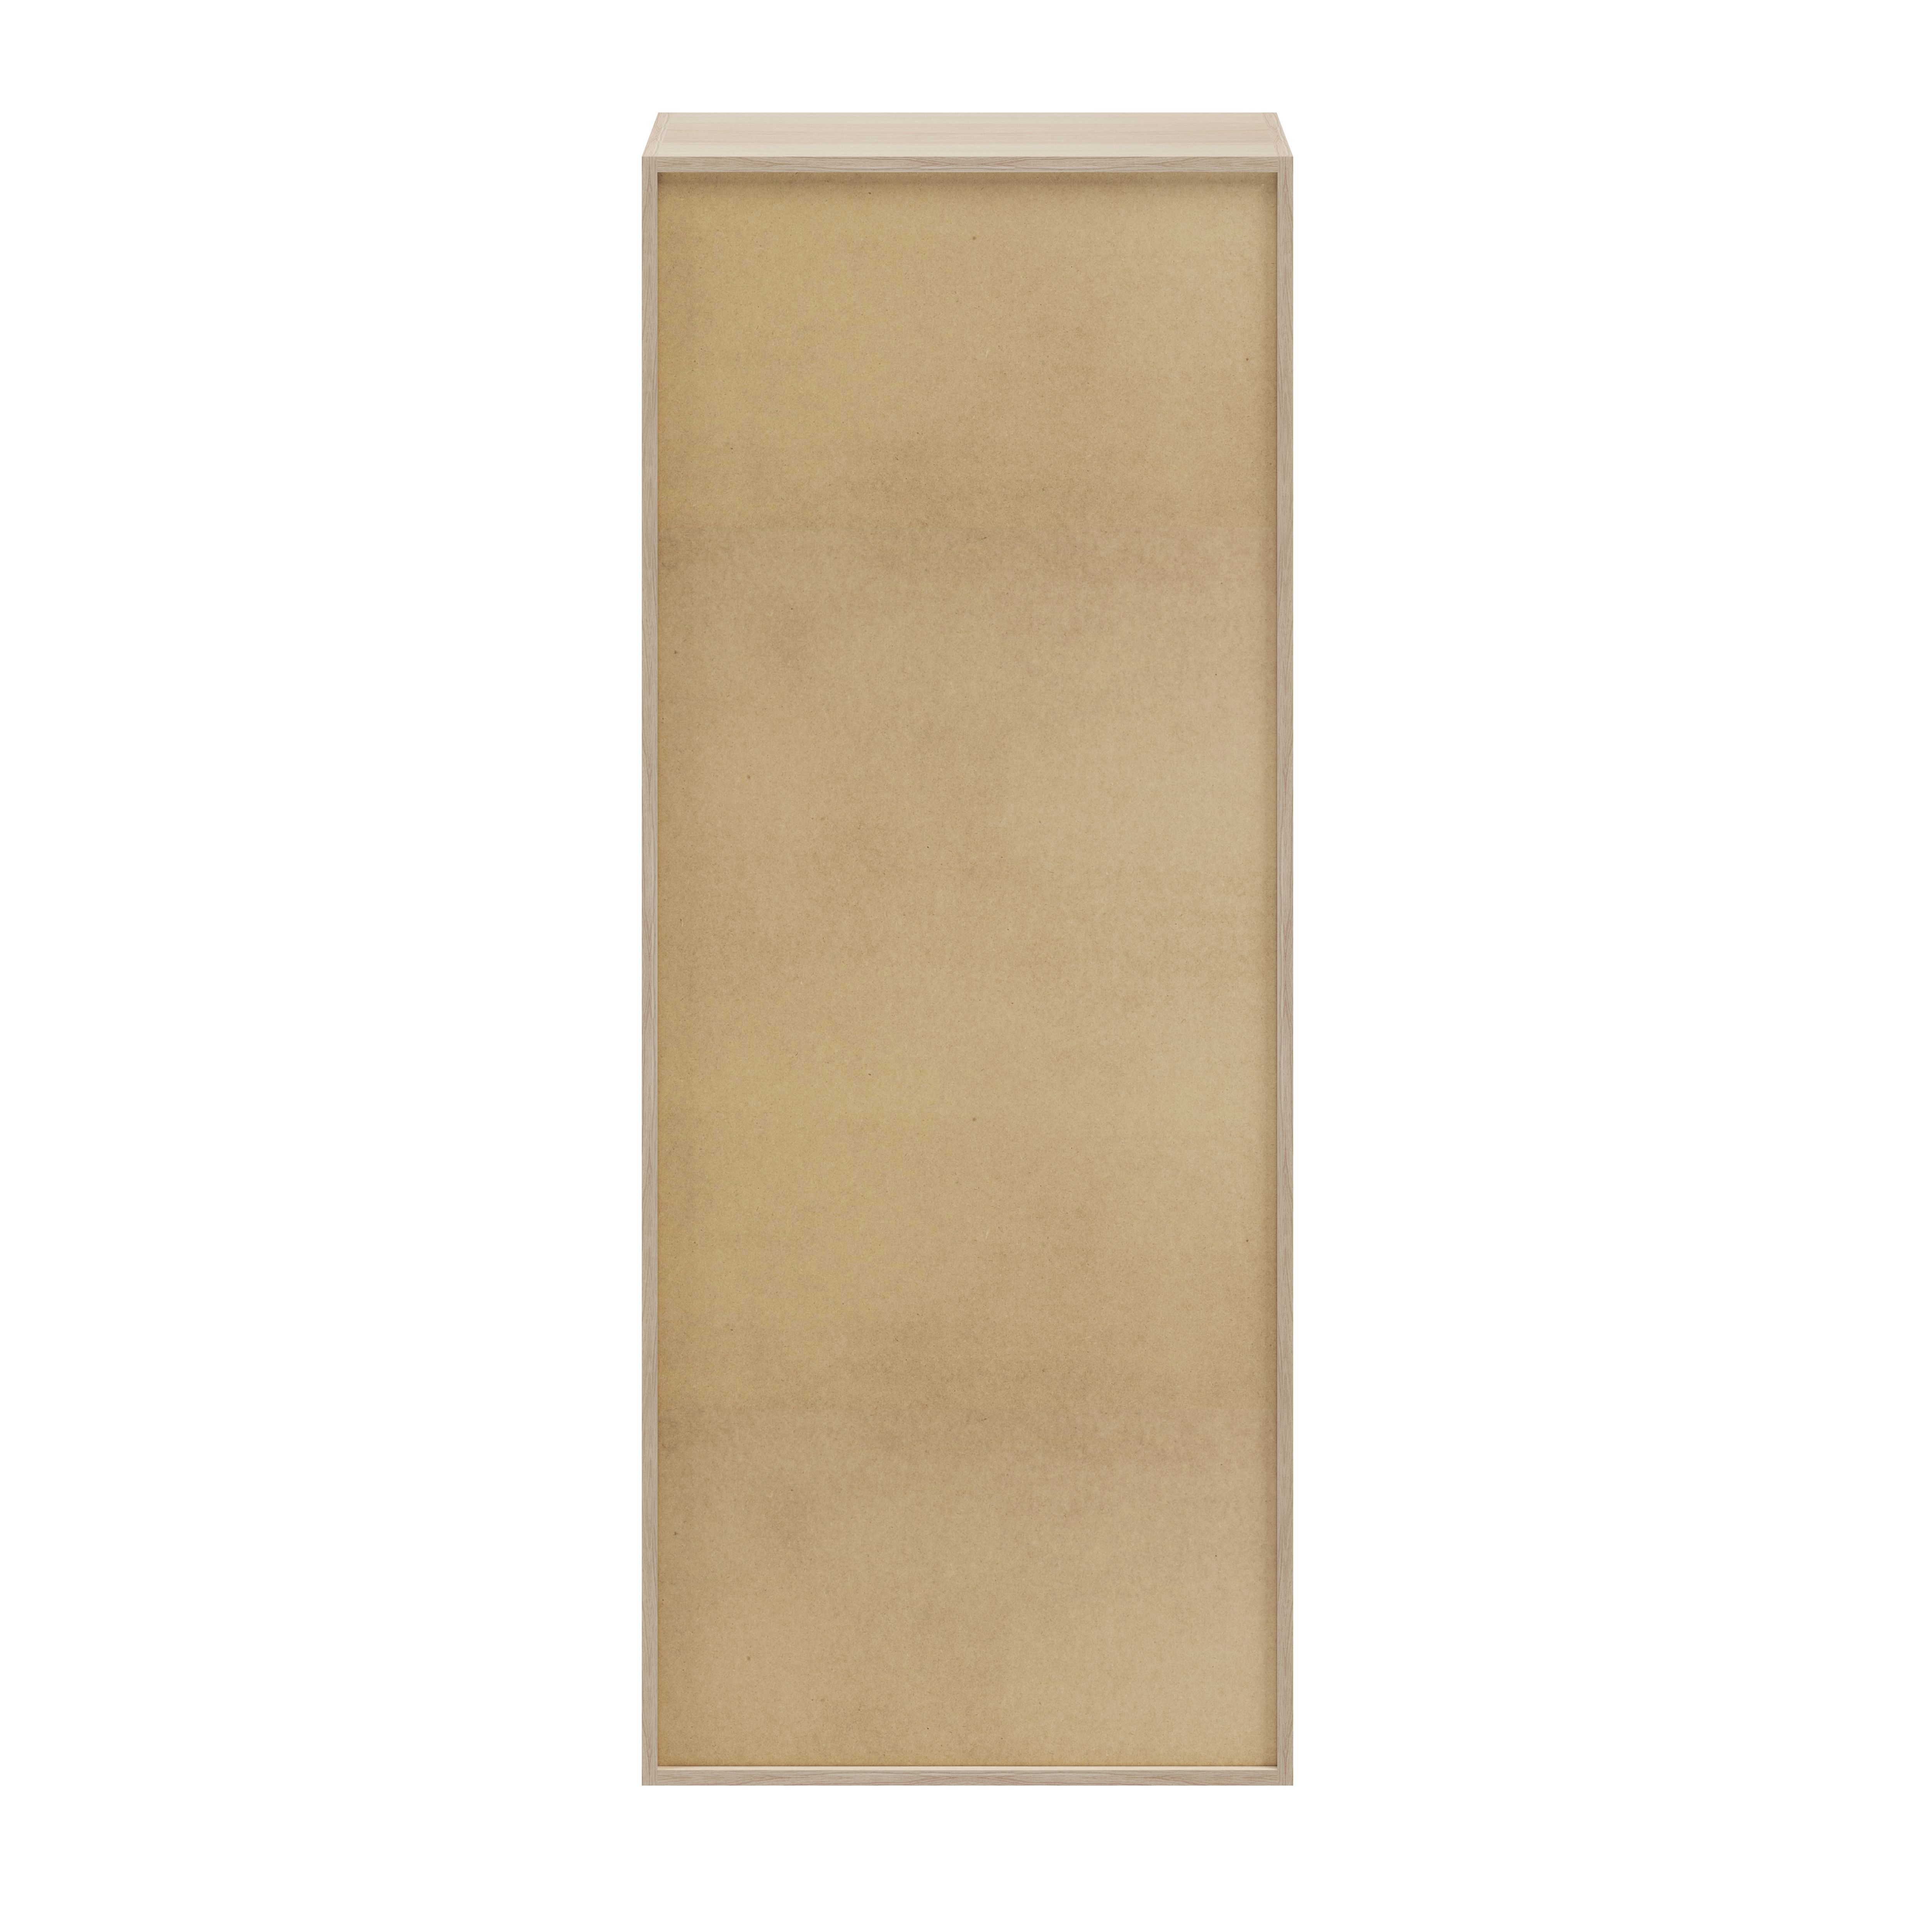 GoodHome Atomia Oak effect Modular furniture cabinet, (H)1875mm (W)750mm (D)350mm